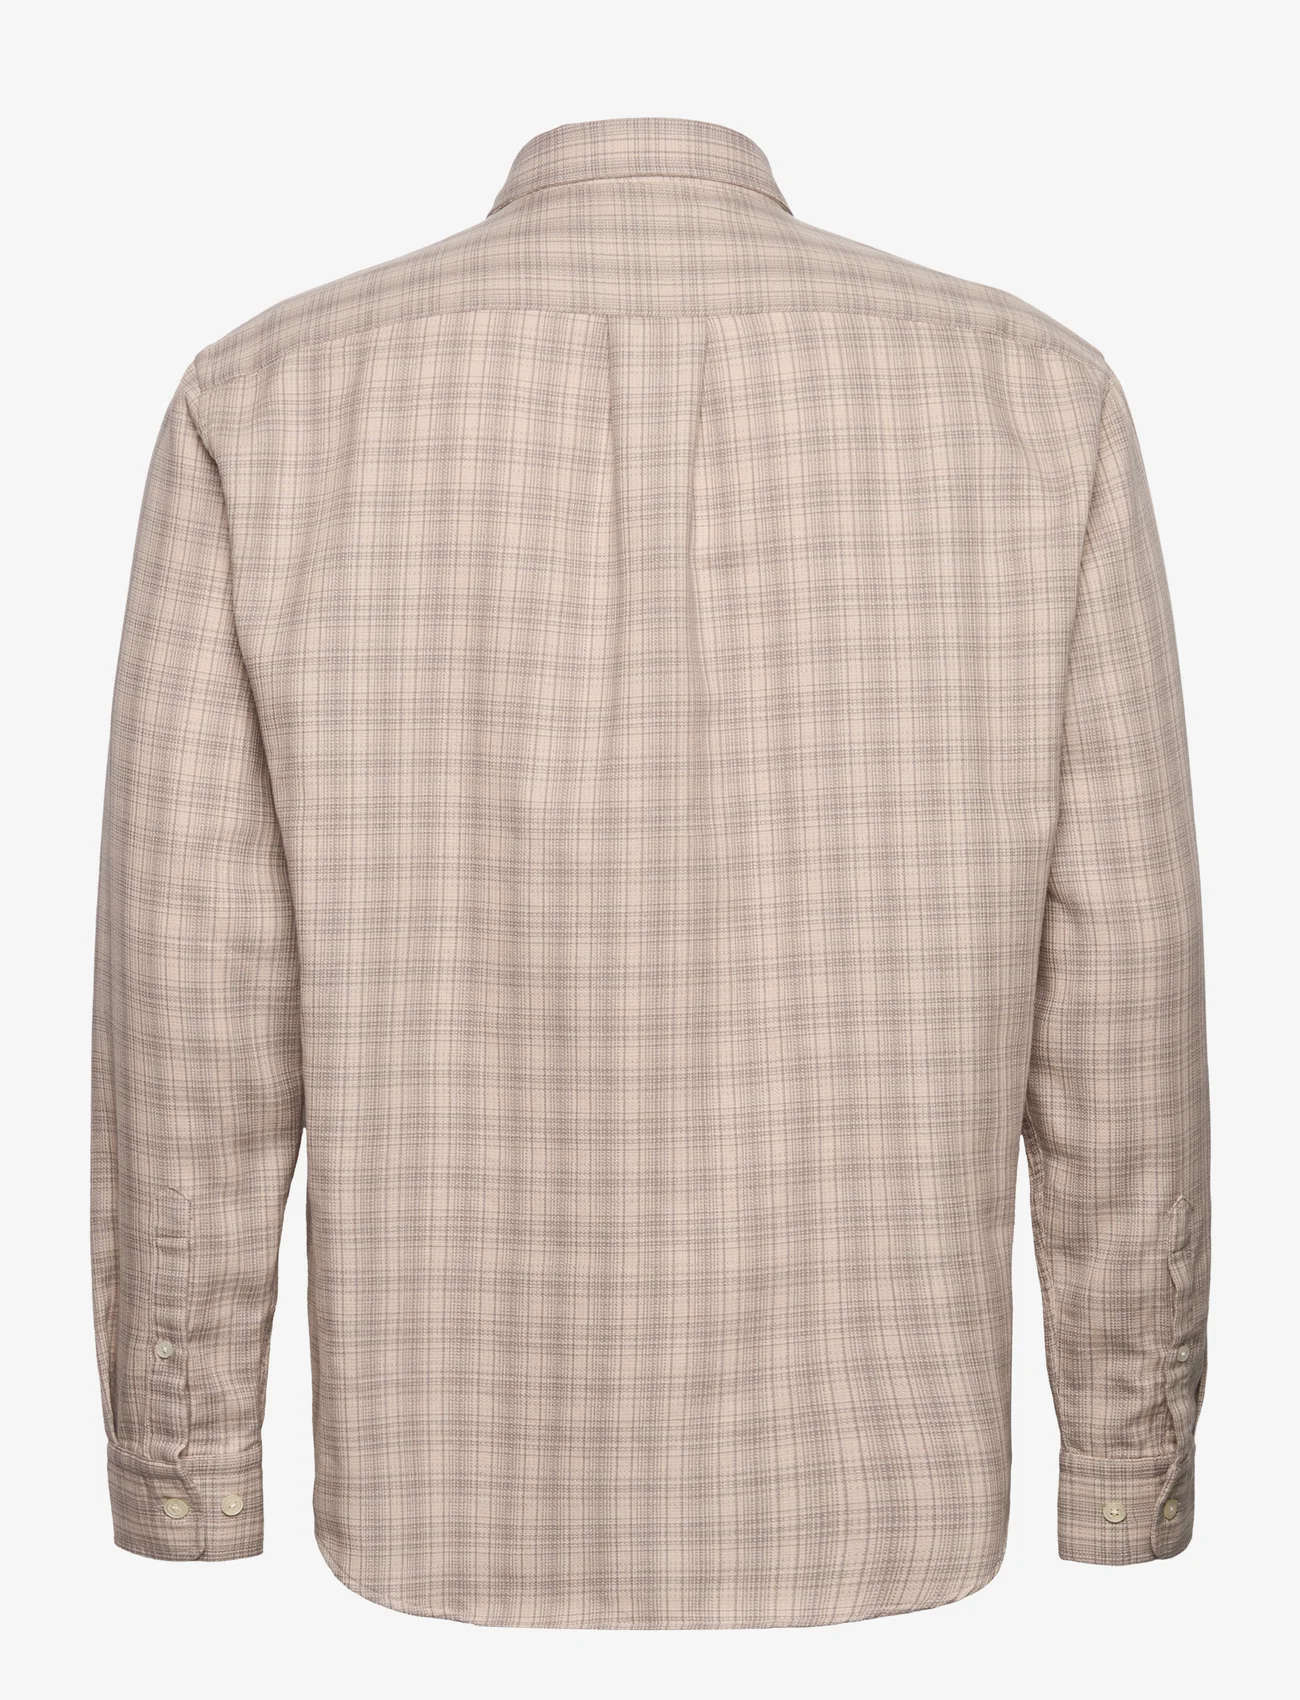 Mads Nørgaard - Summer Cotton Malte Shirt - geruite overhemden - rainy day/vintage khaki - 1